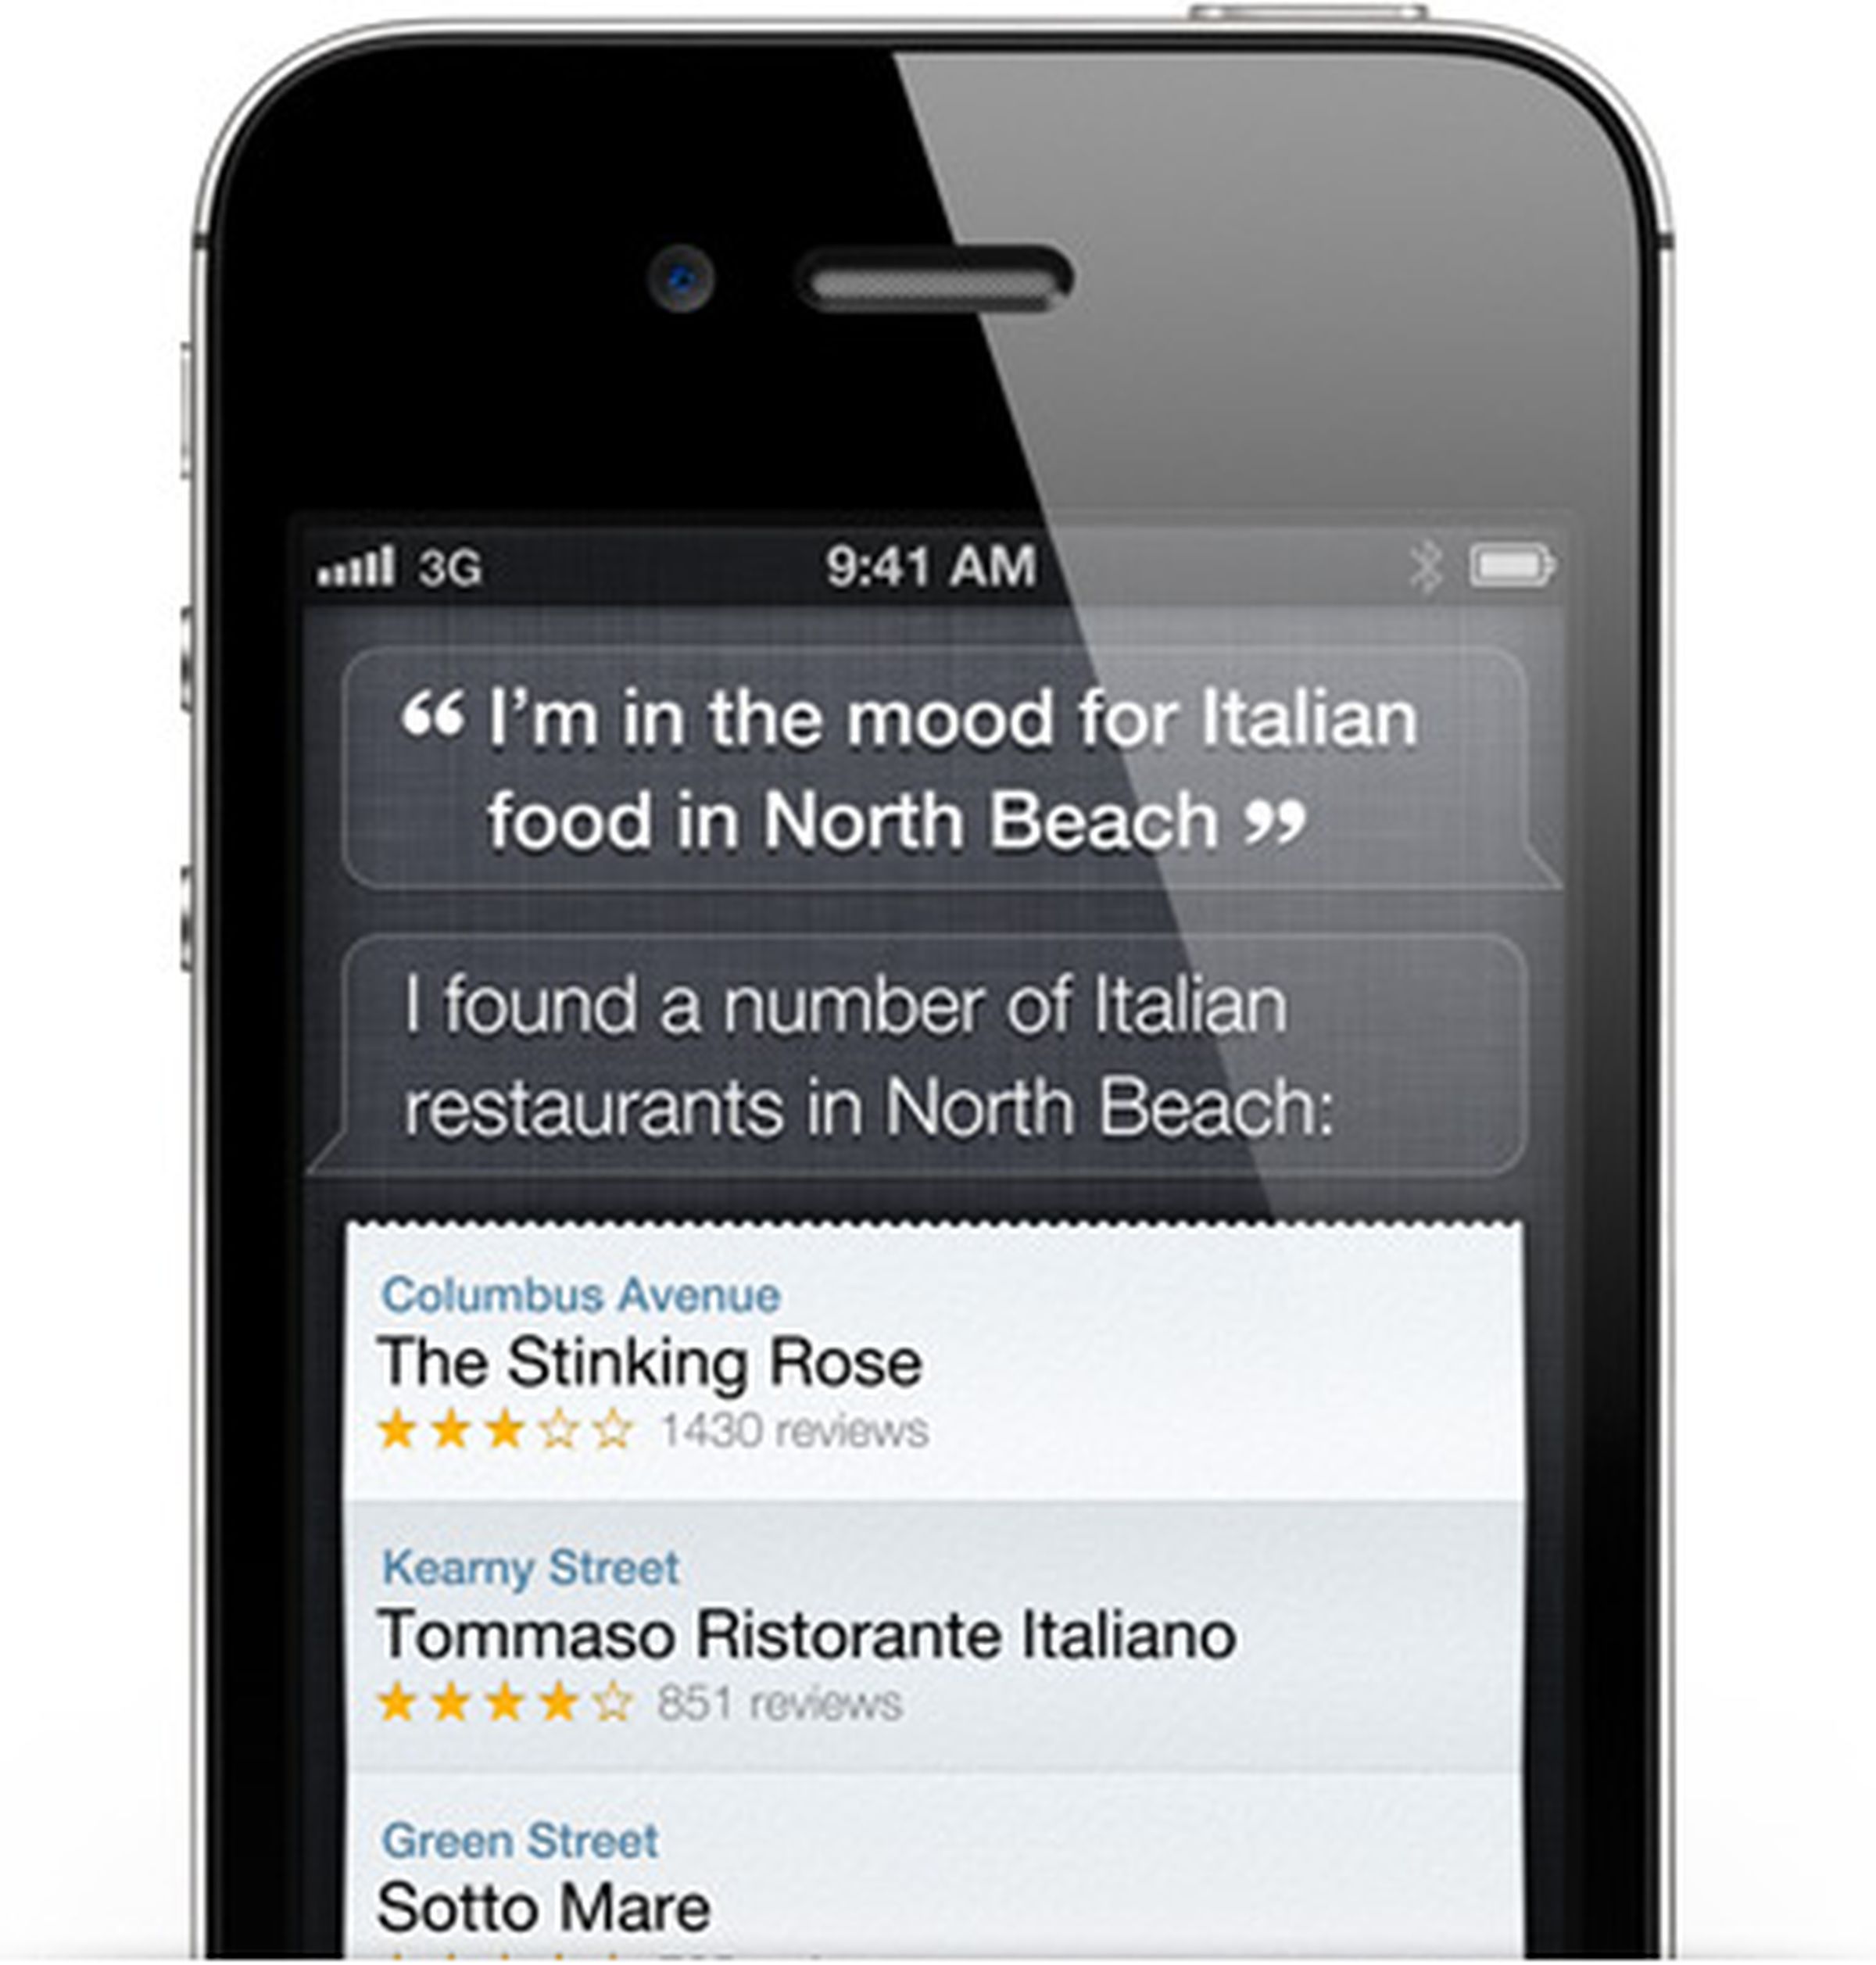 iPhone 4S Siri image gallery